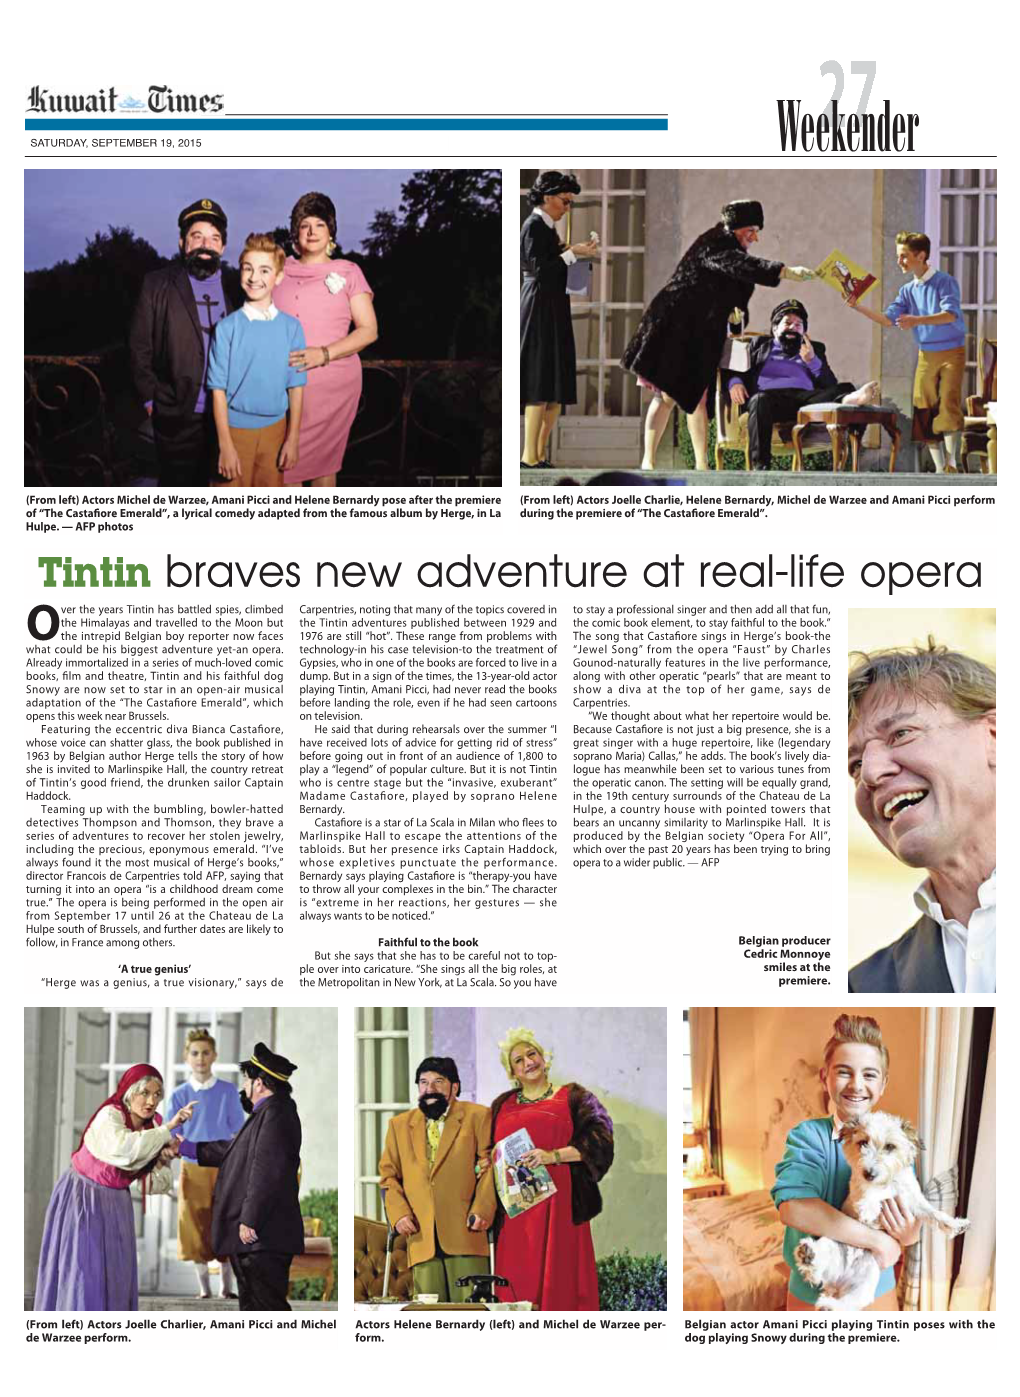 Tintin Braves New Adventure at Real-Life Opera